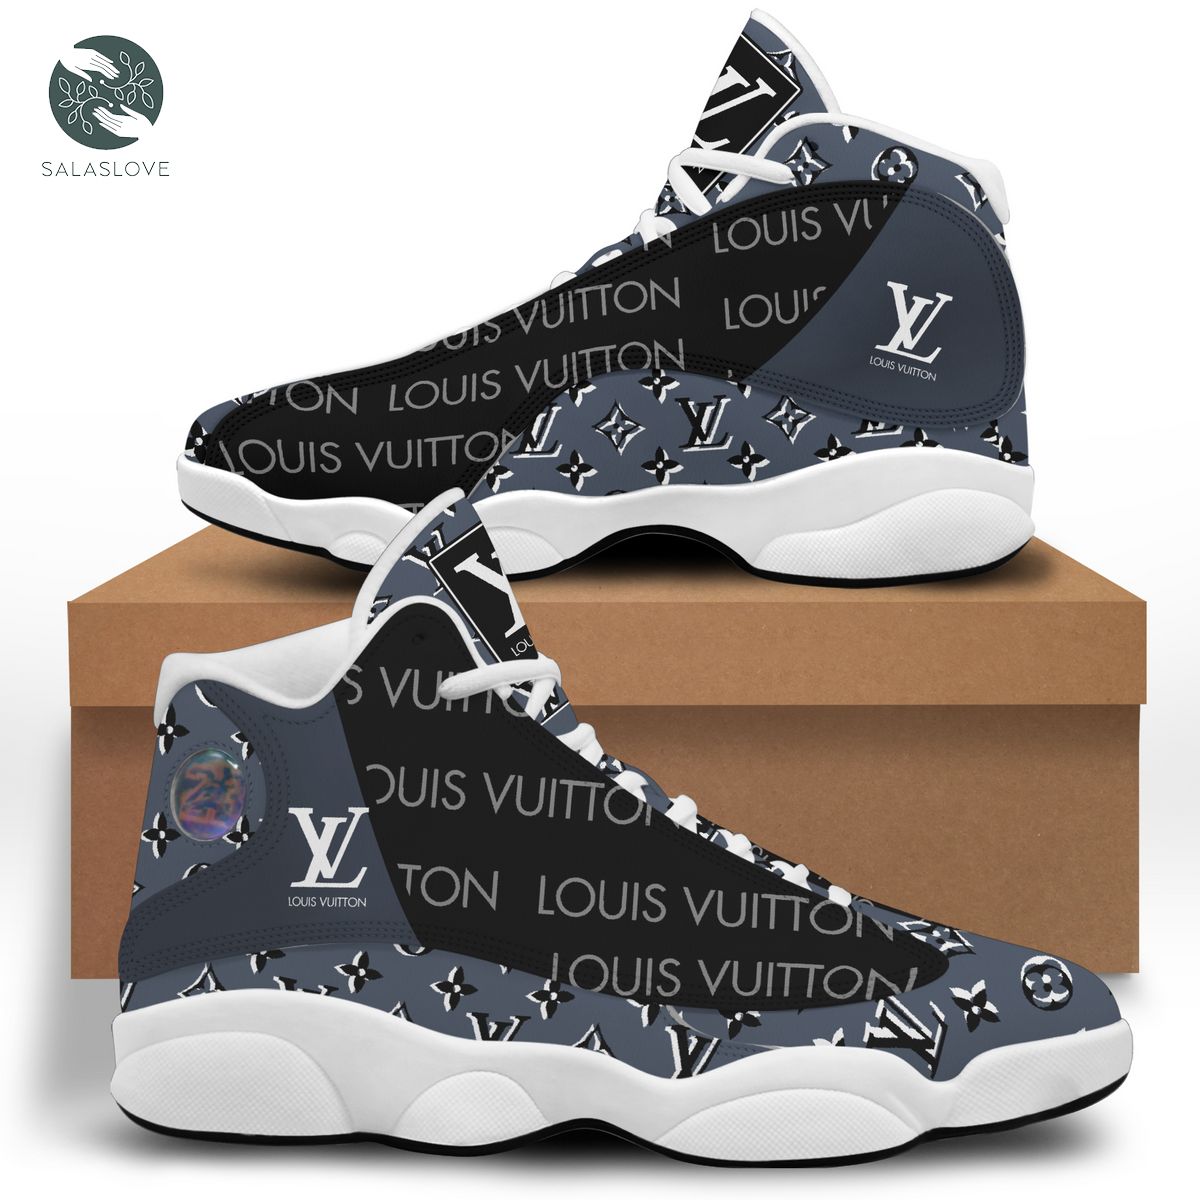 Louis Vuitton Air Jordan 13 Sneakers Shoes Gift For Men Women